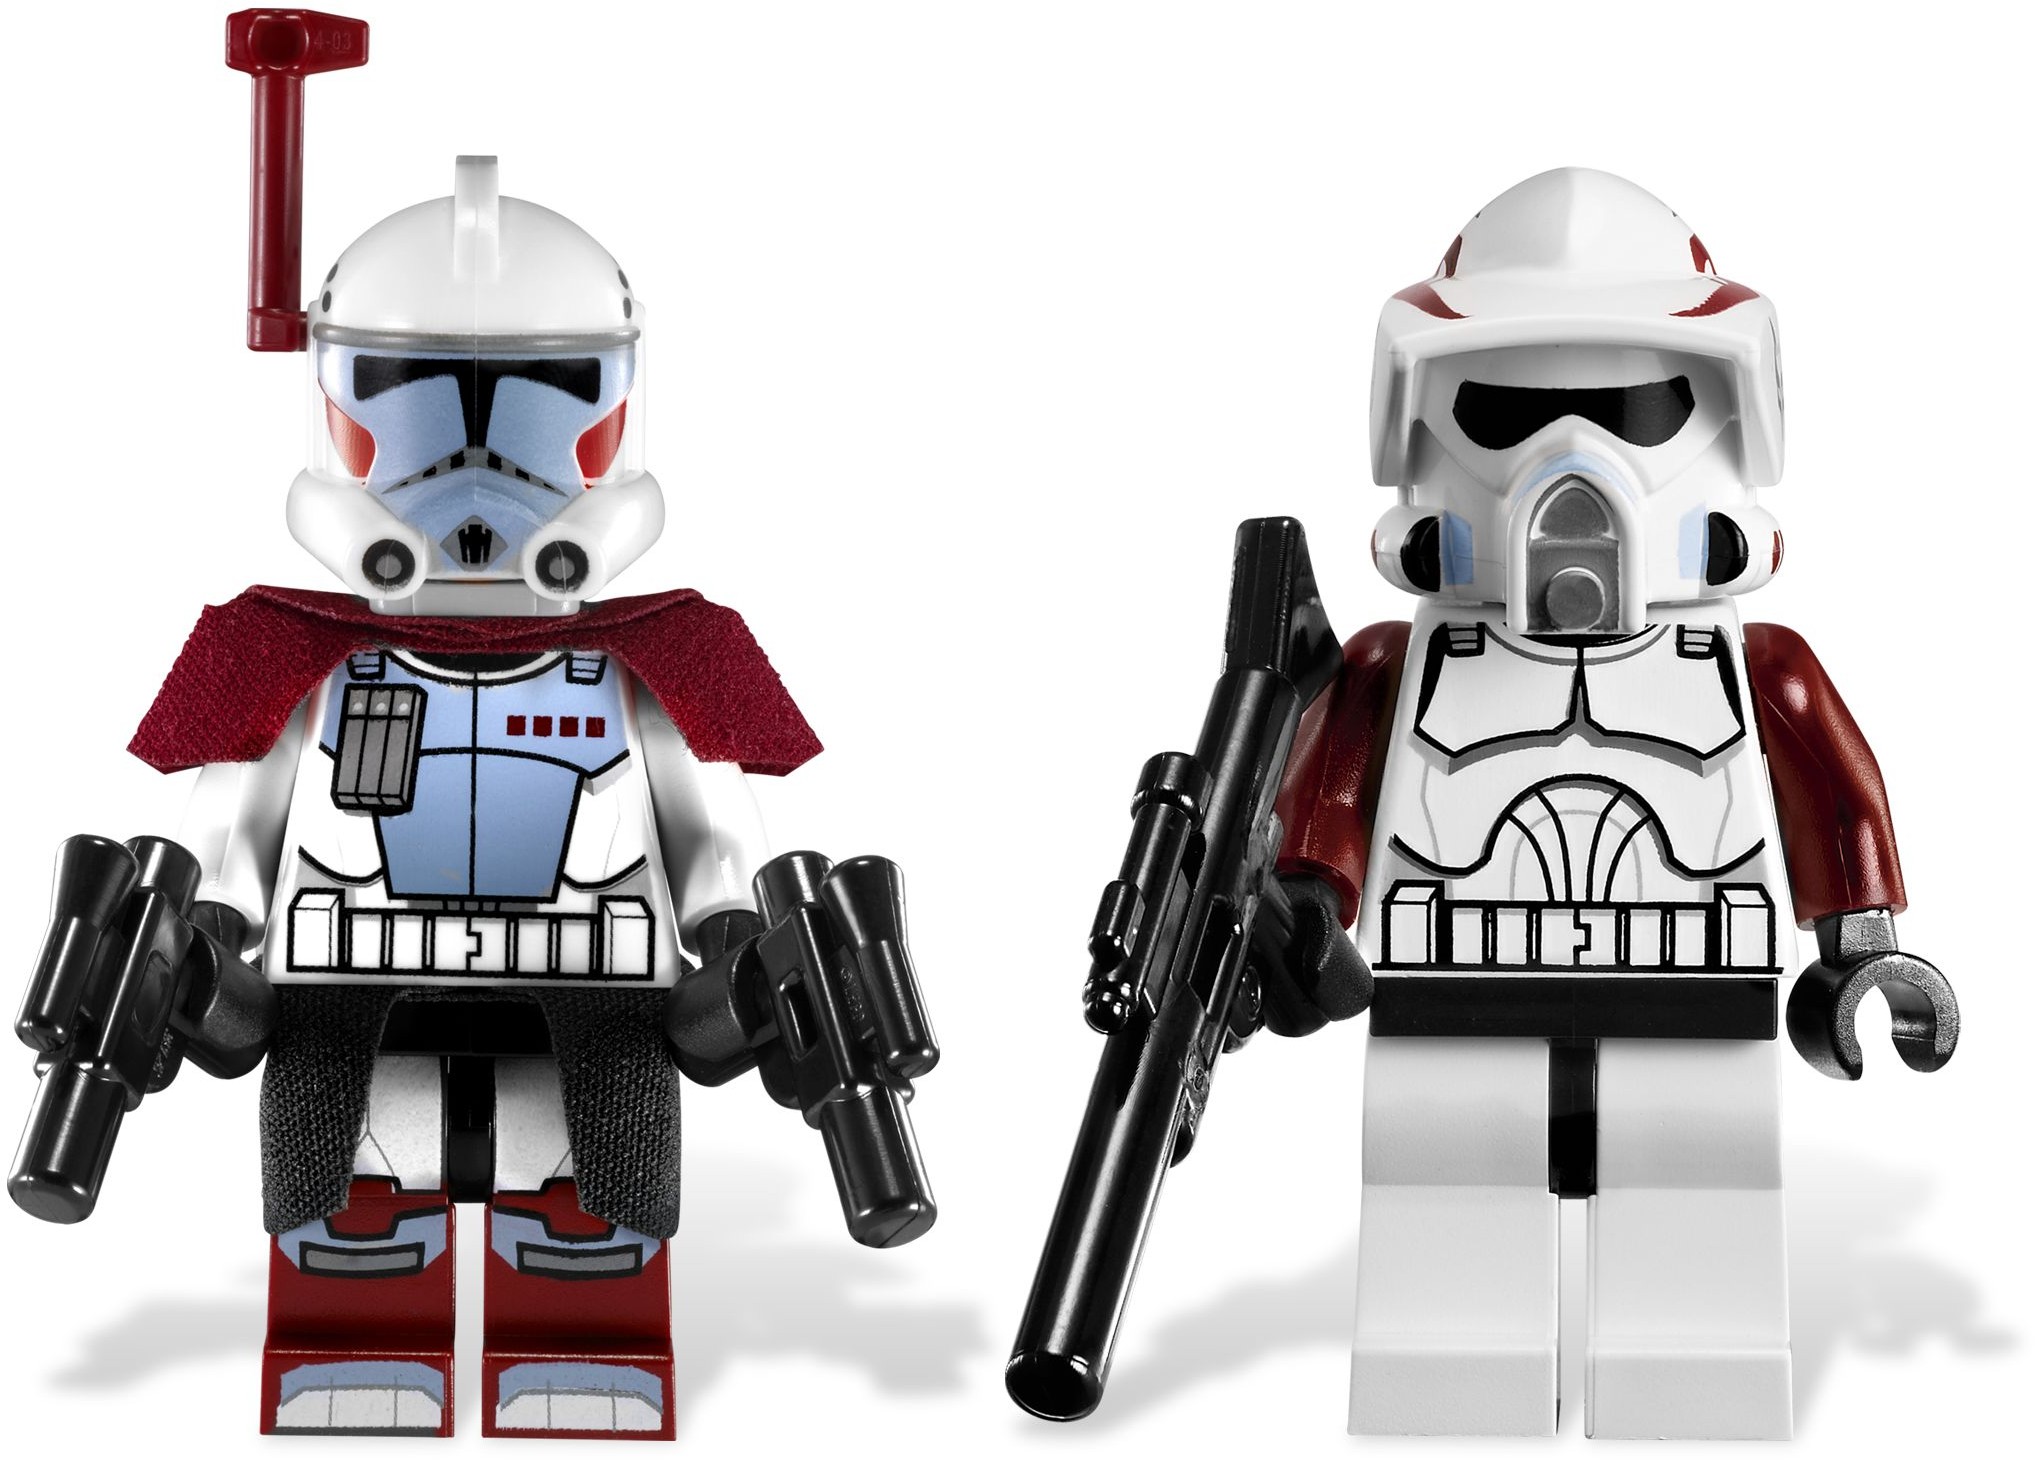 Lego 9488 Elite Clone Trooper & Commando Droid Battle Pack - Lego Star Wars set for sale best price